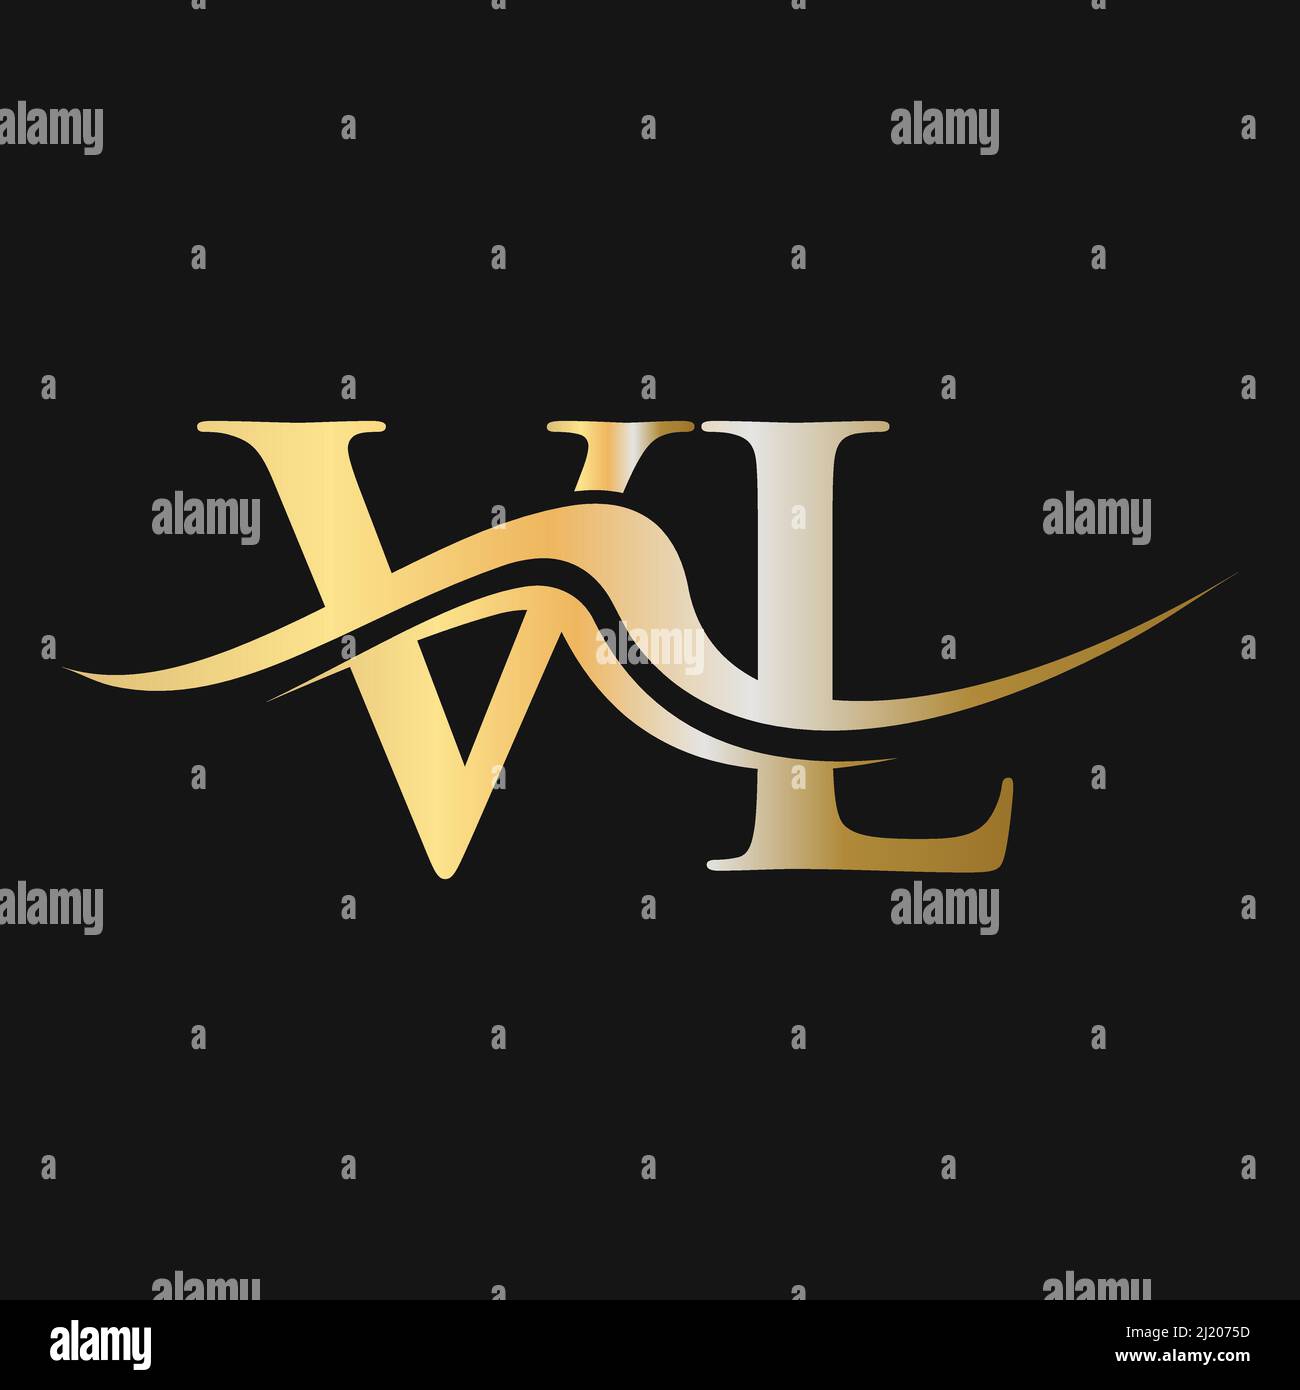 Vl initial letter gold calligraphic feminine Vector Image